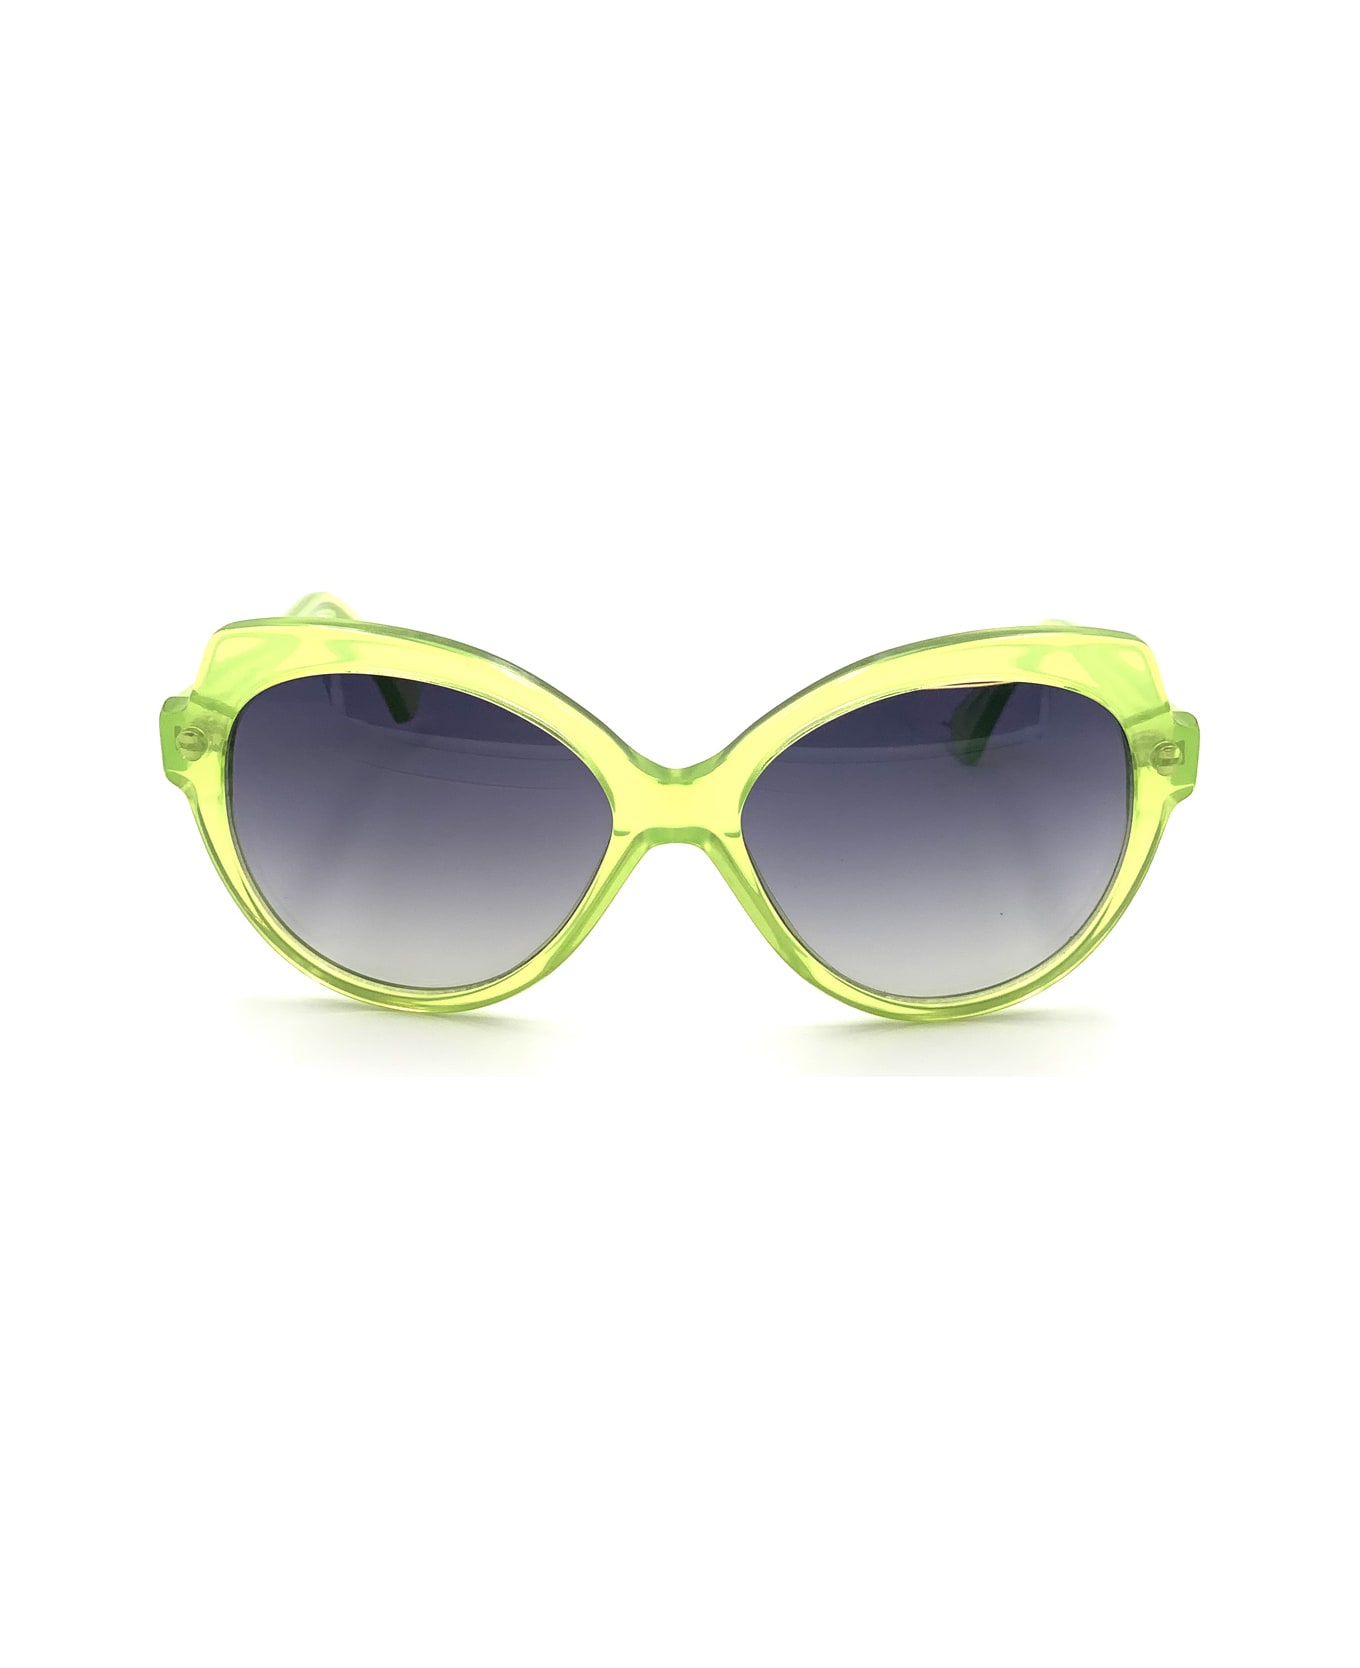 Silvian Heach Cosmopolitan/s Sunglasses - Giallo